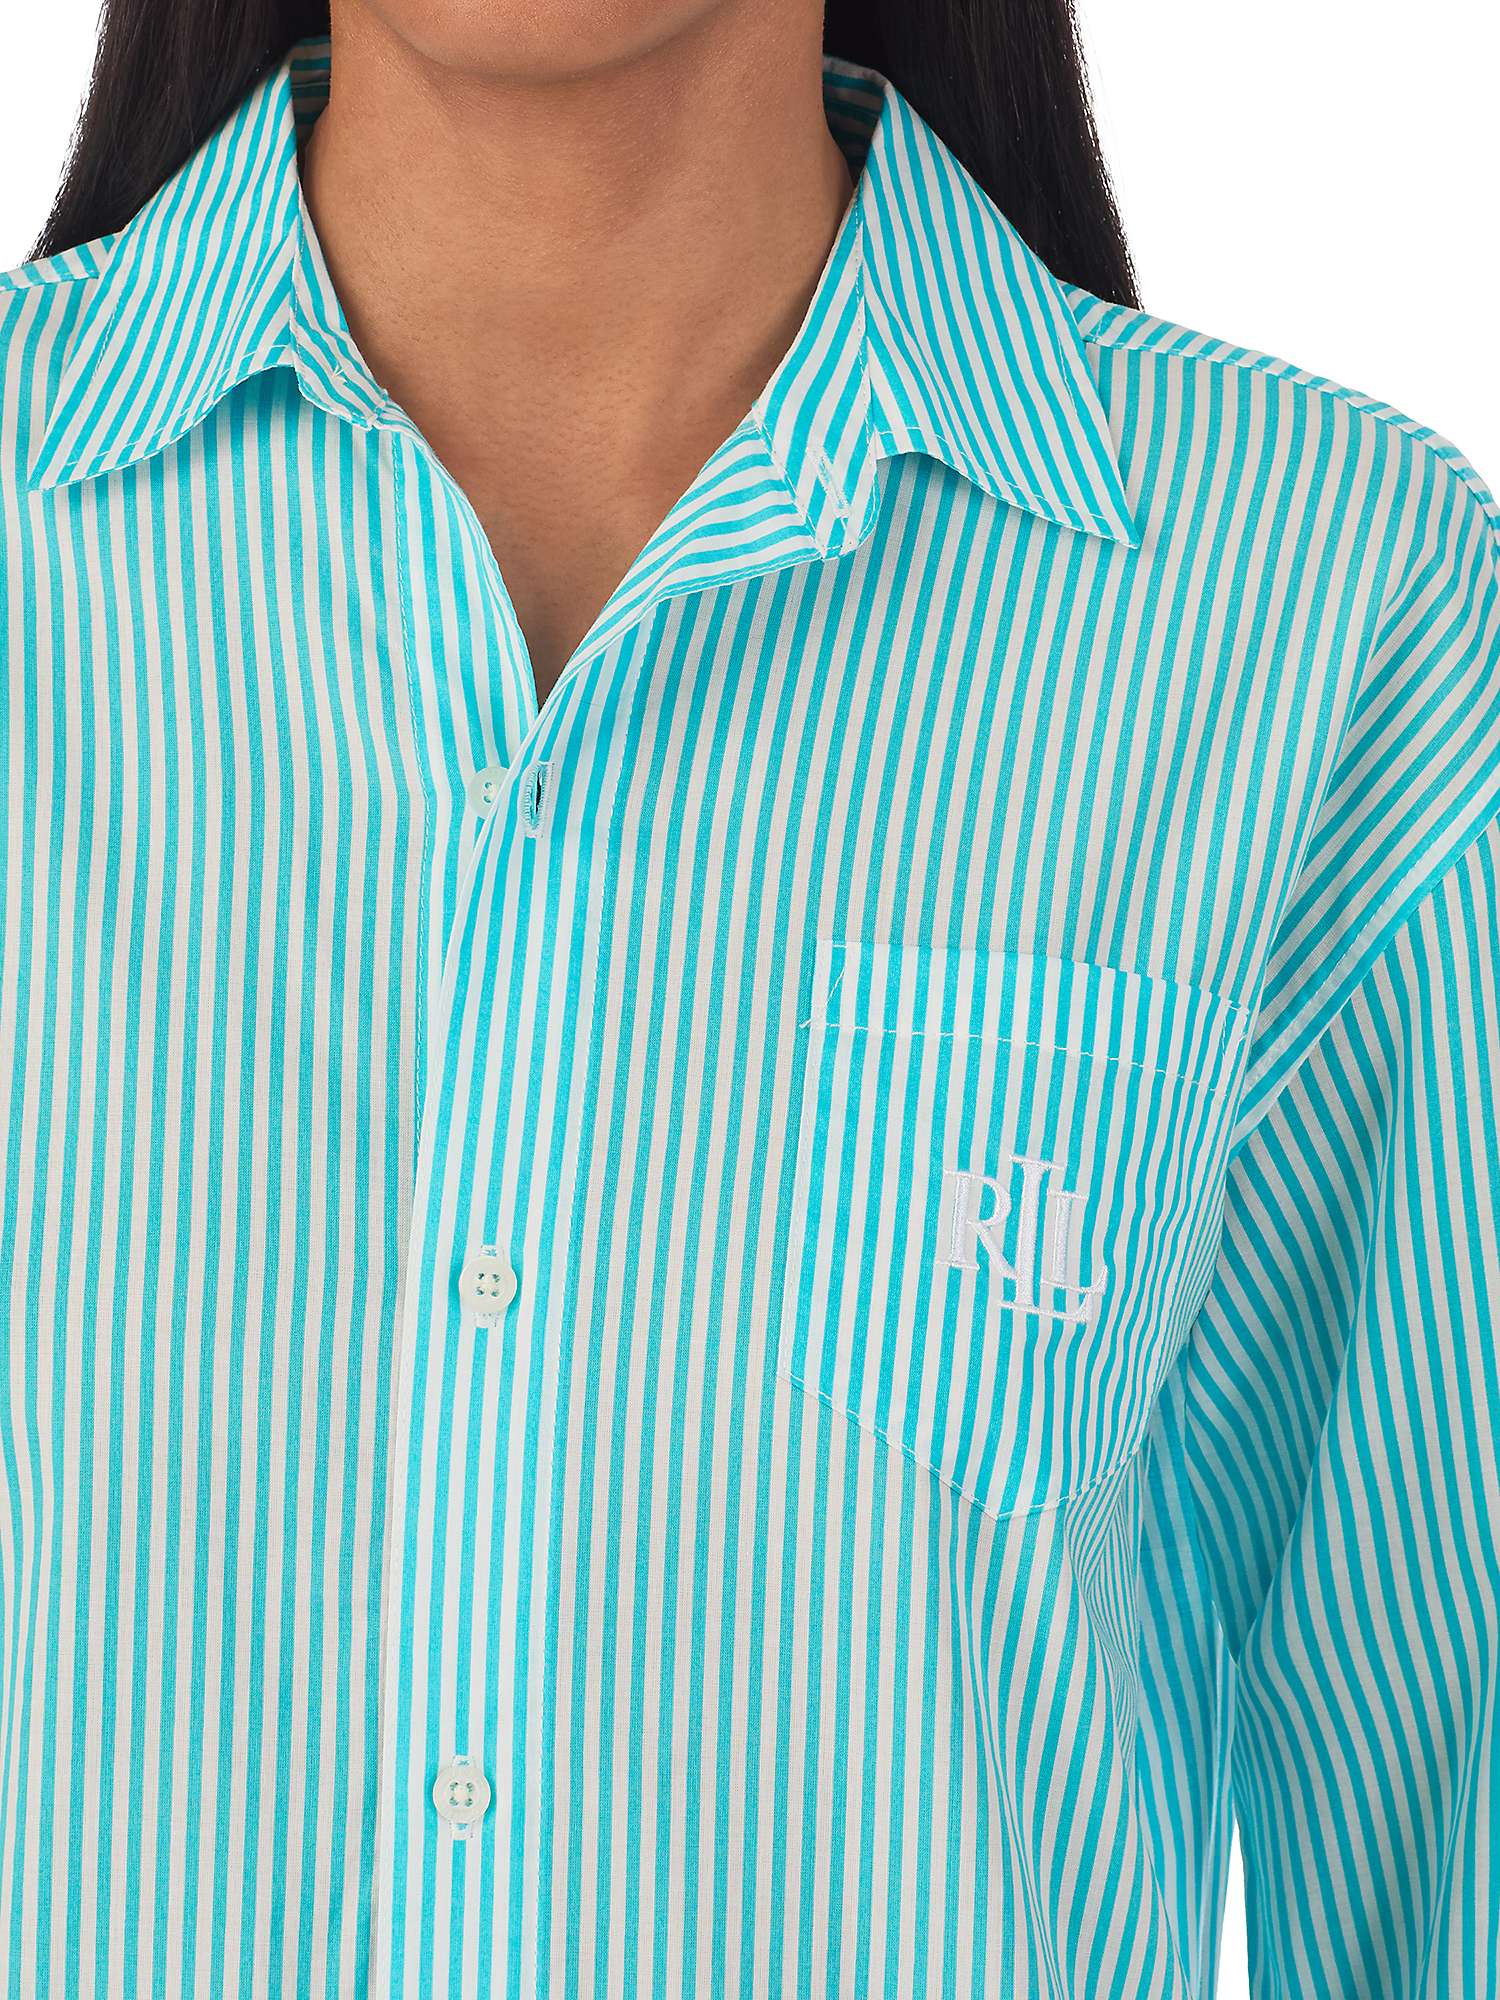 Buy Lauren Ralph Lauren Striped Nightshirt, Turquoise/White Online at johnlewis.com